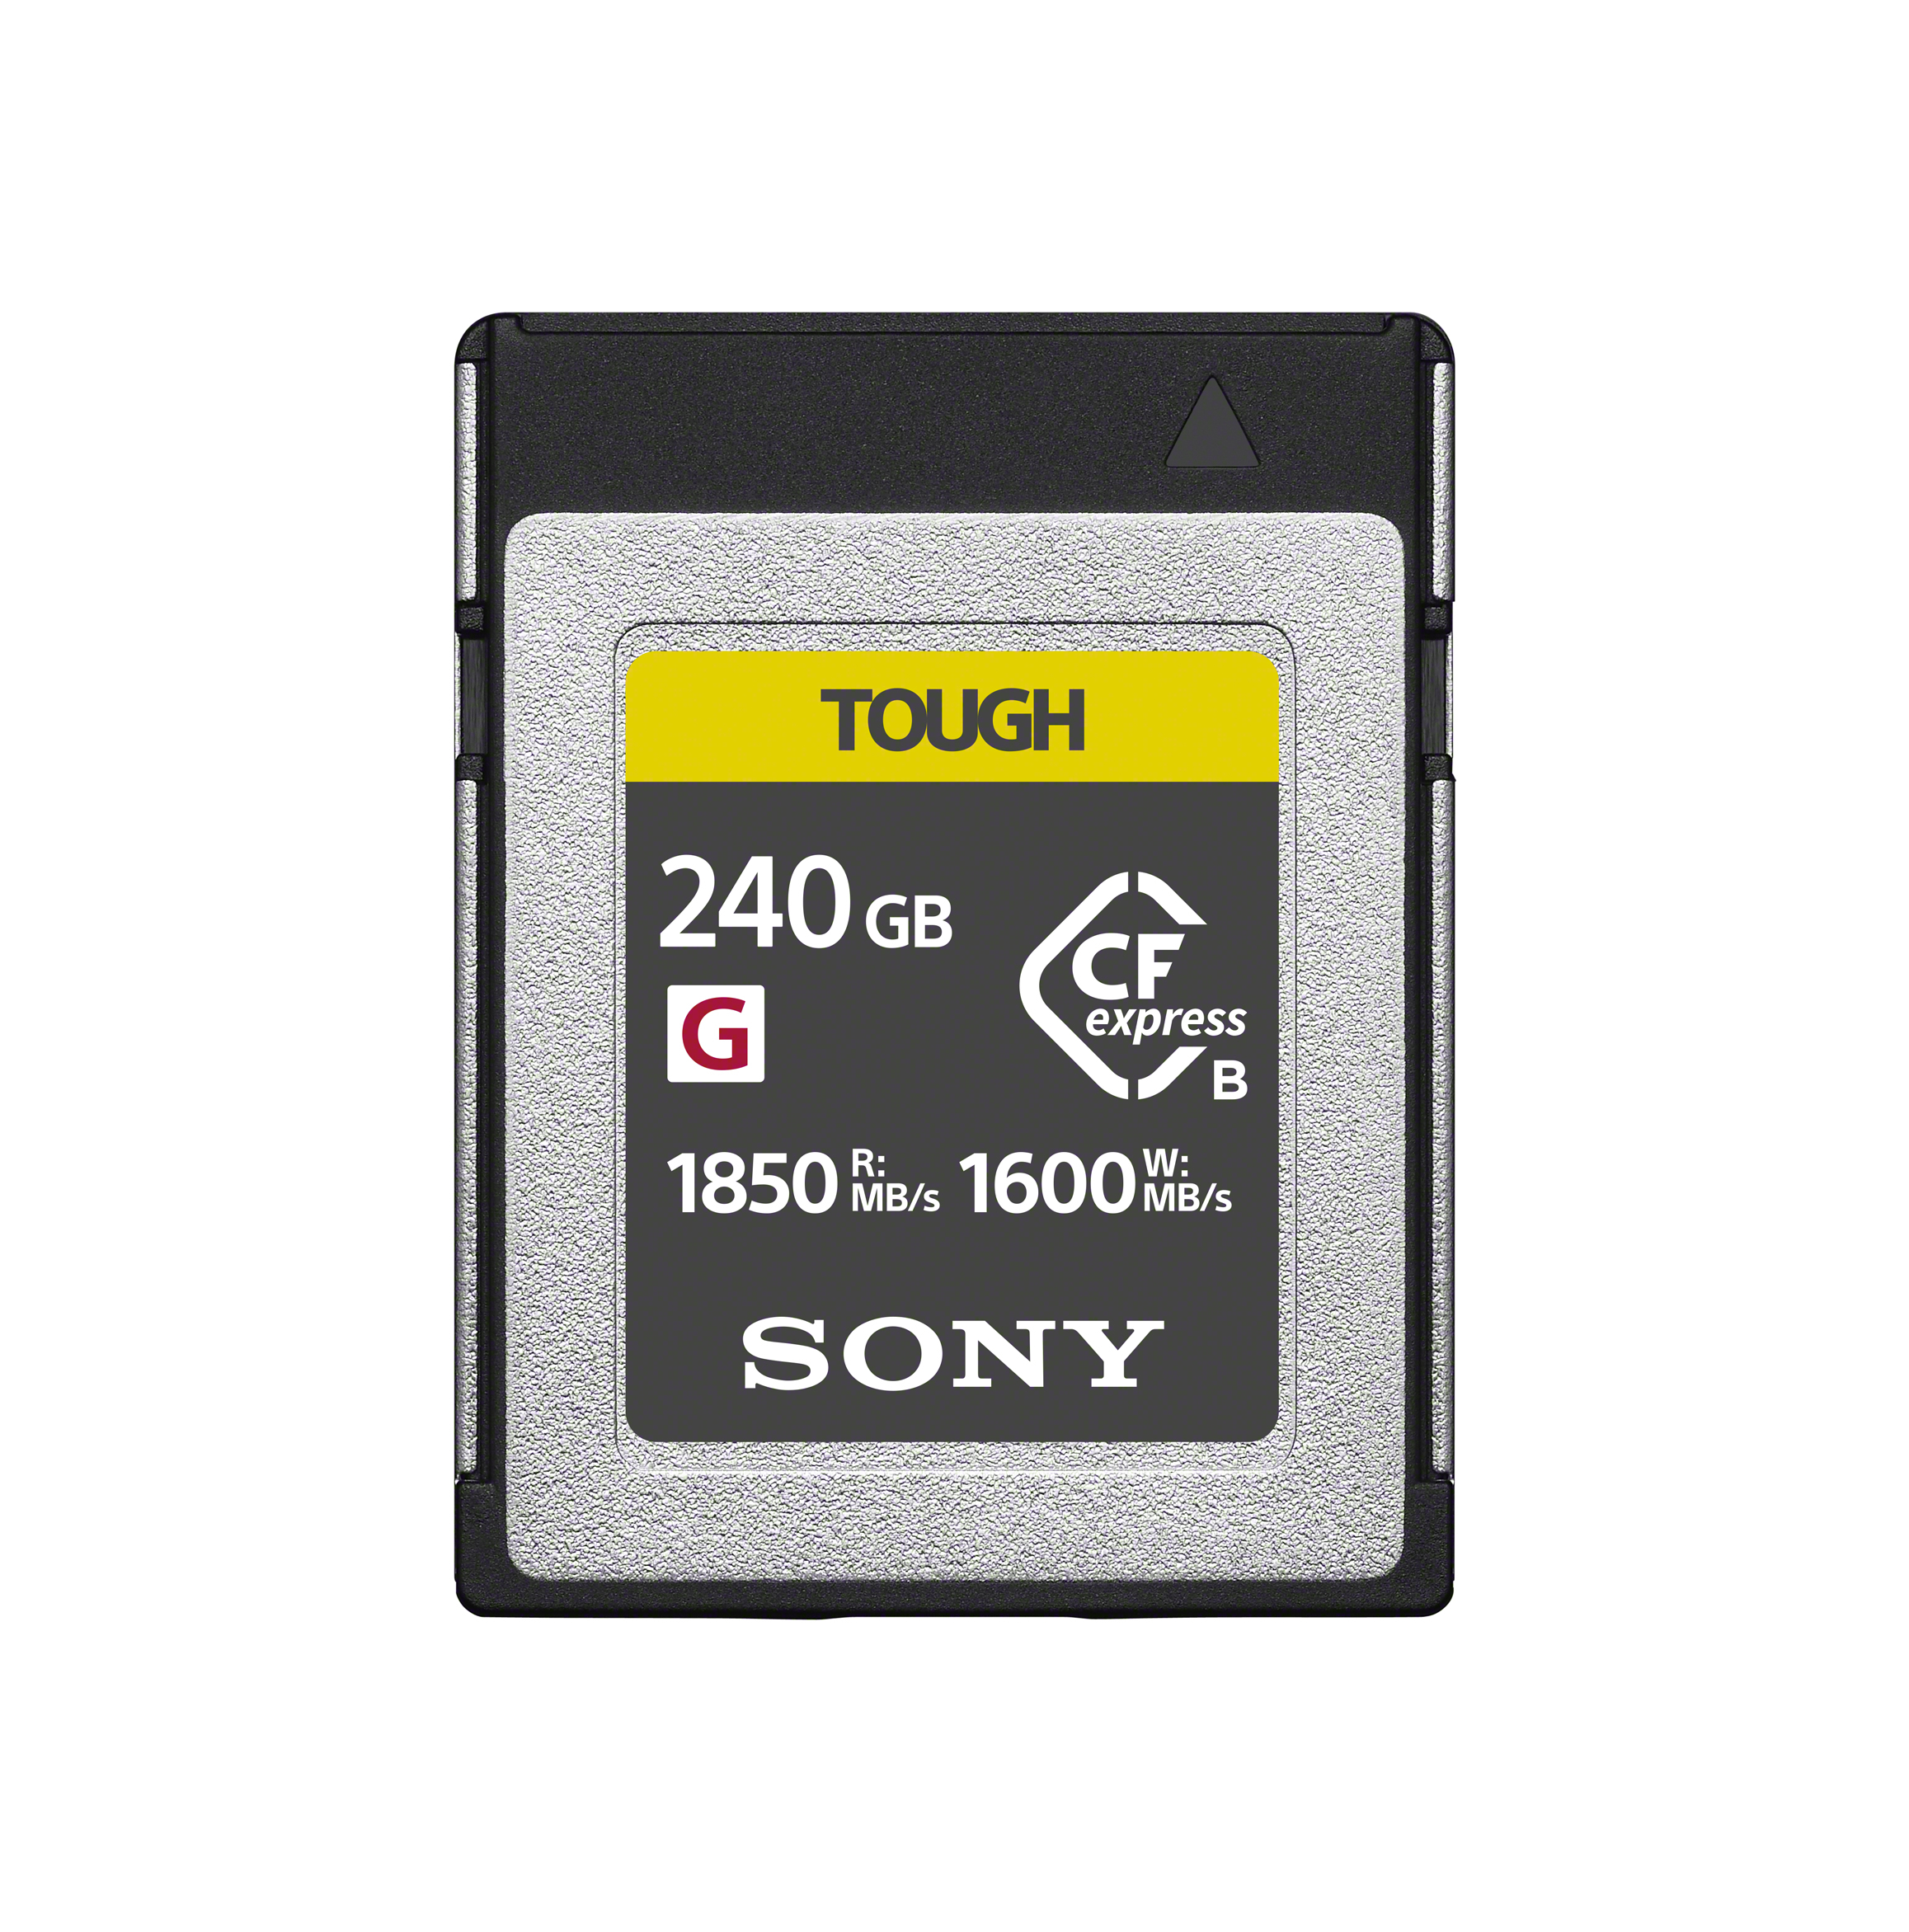 Sony CFexpress Type B 240GB R 1850MB/s W 1600MB/s